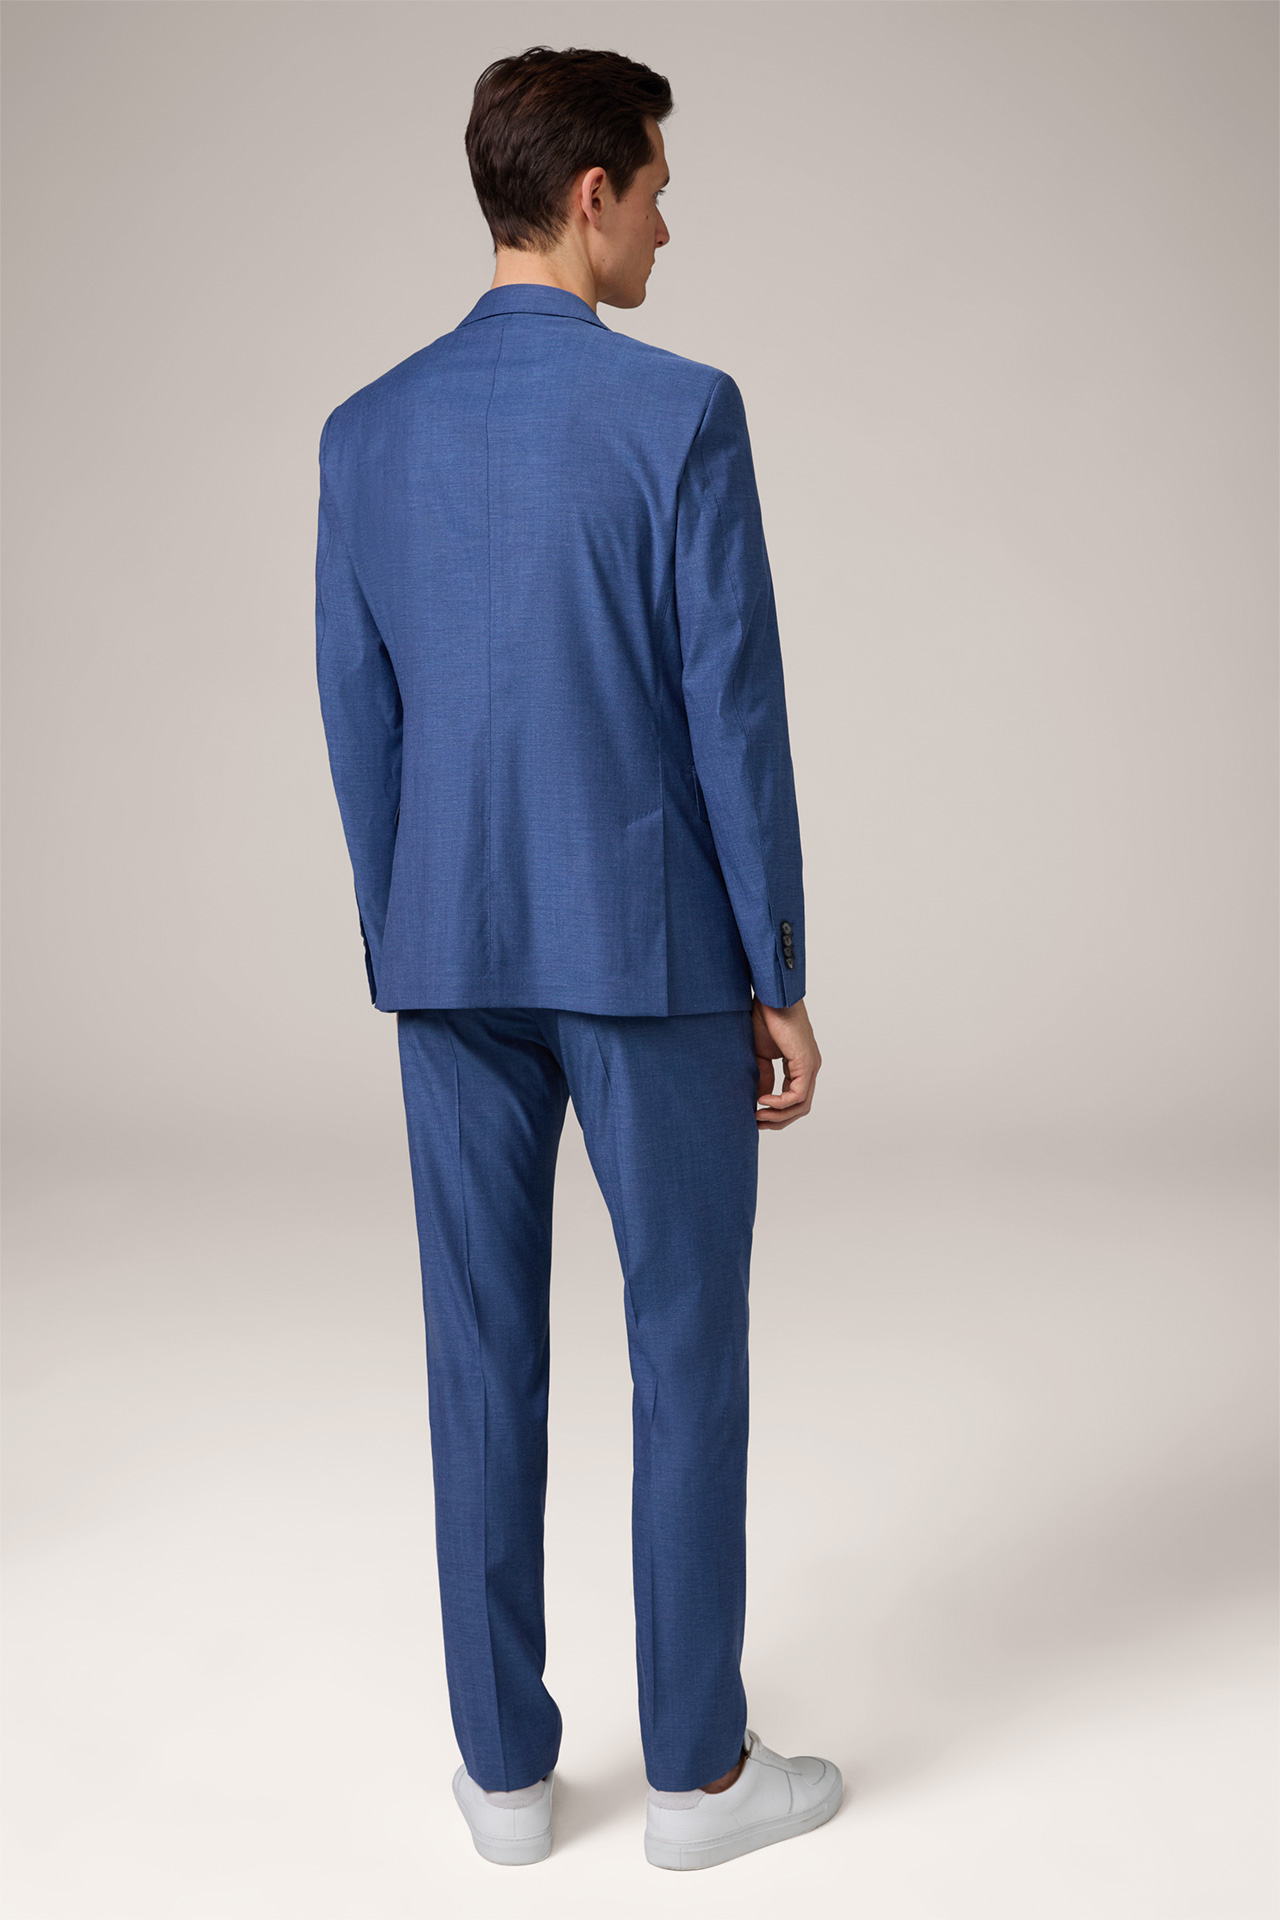 Sono-Bene Virgin Wool Suit in Royal Blue